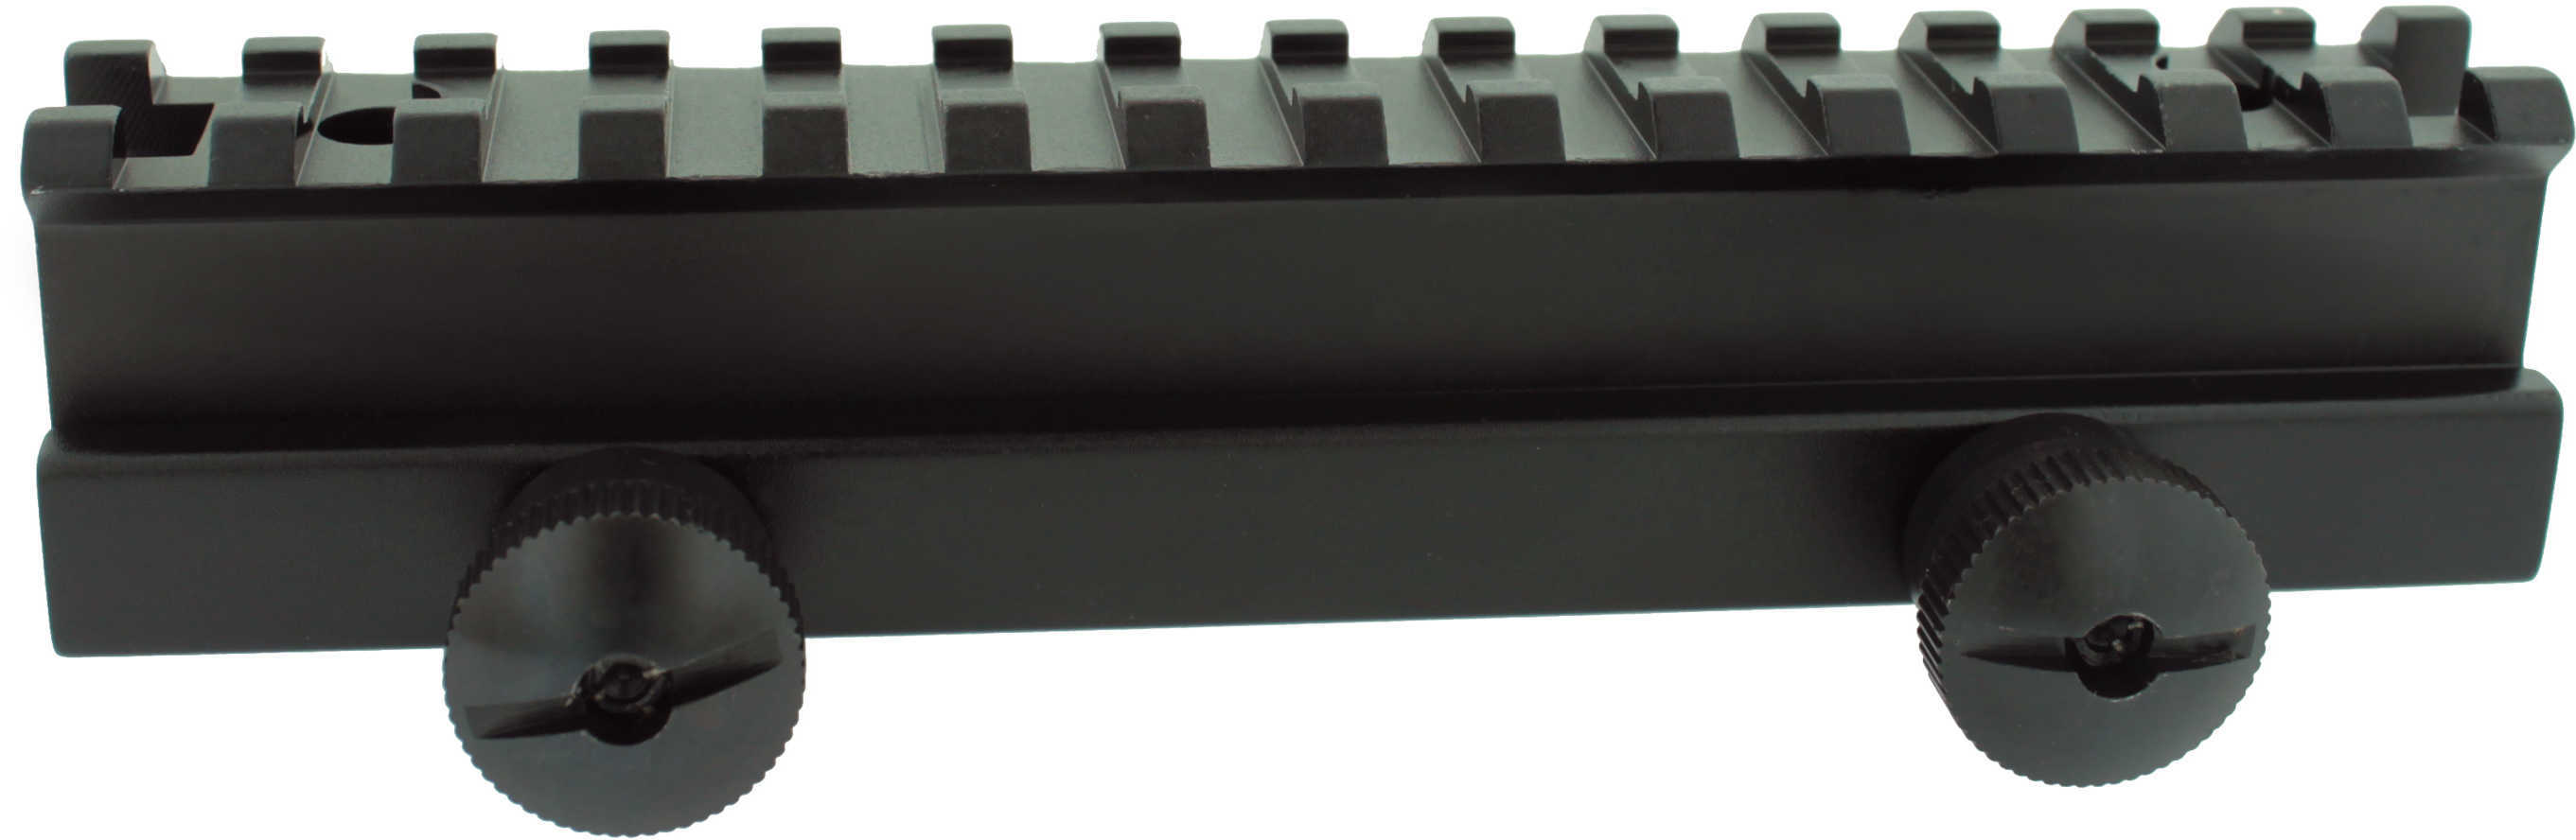 Weaver Mounts 48321 Single Rail System AR-15 Flat Top Black Anodized